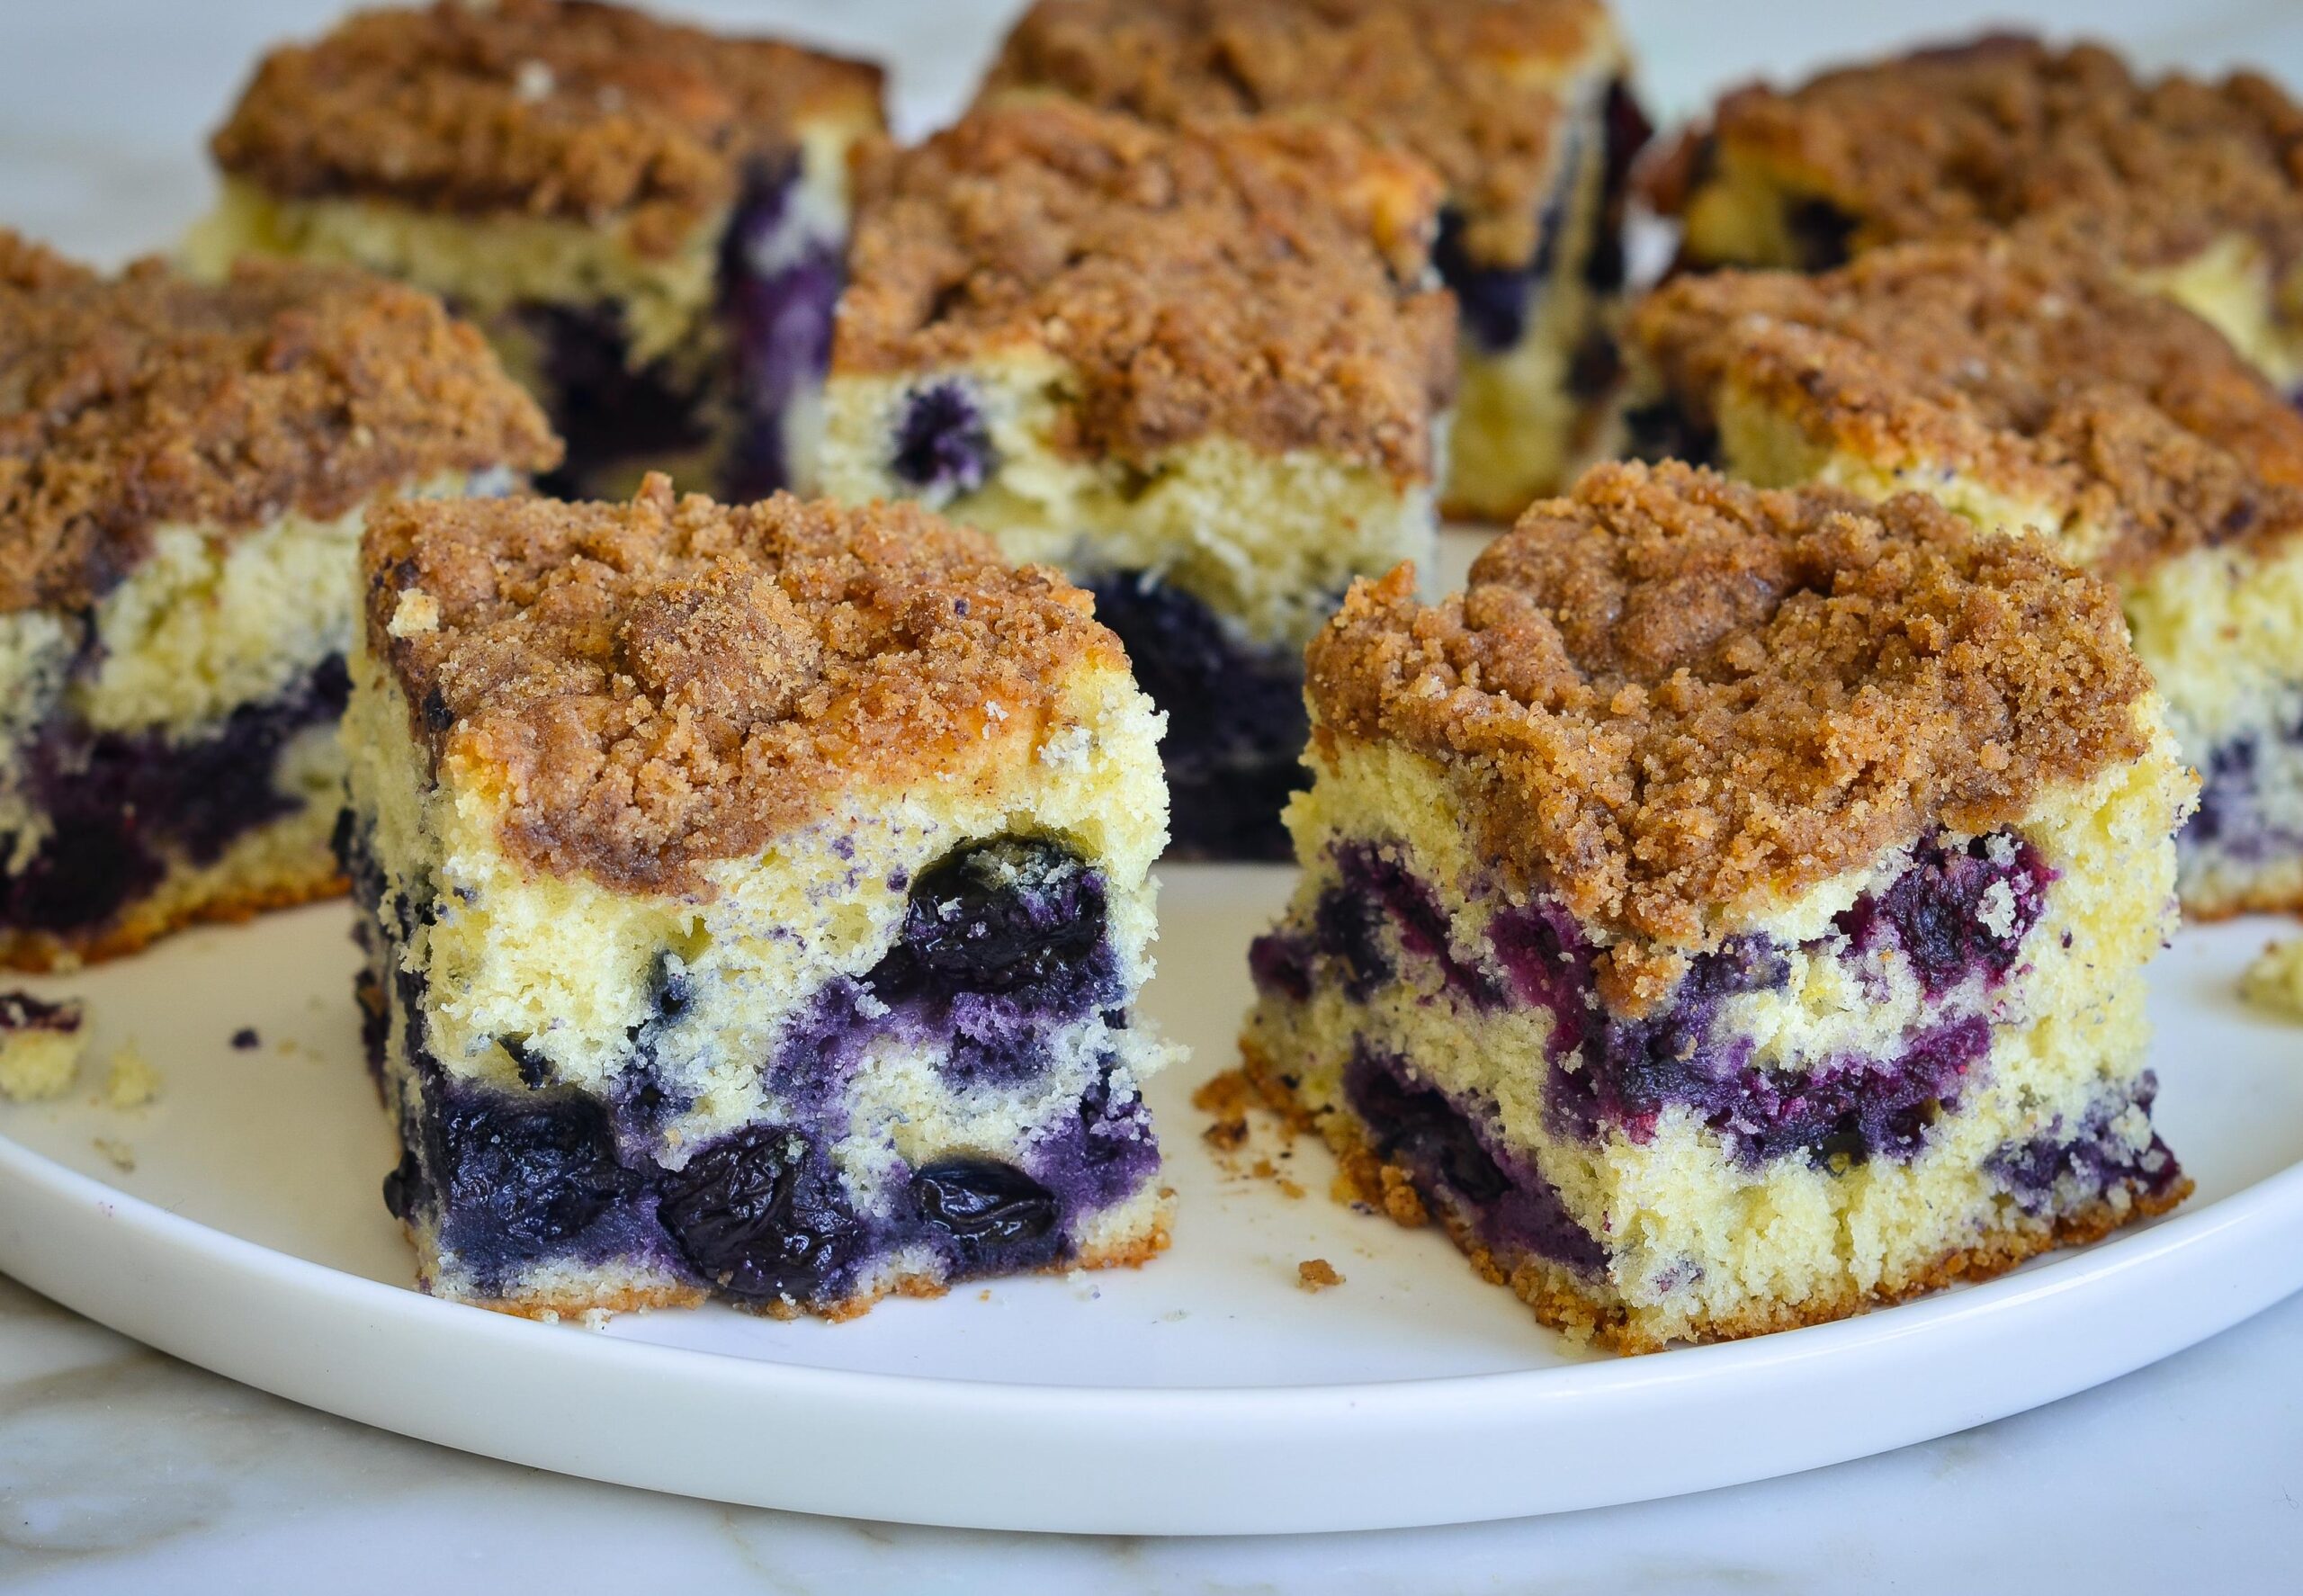  Sweet, juicy blueberries bursting with flavor in every bite